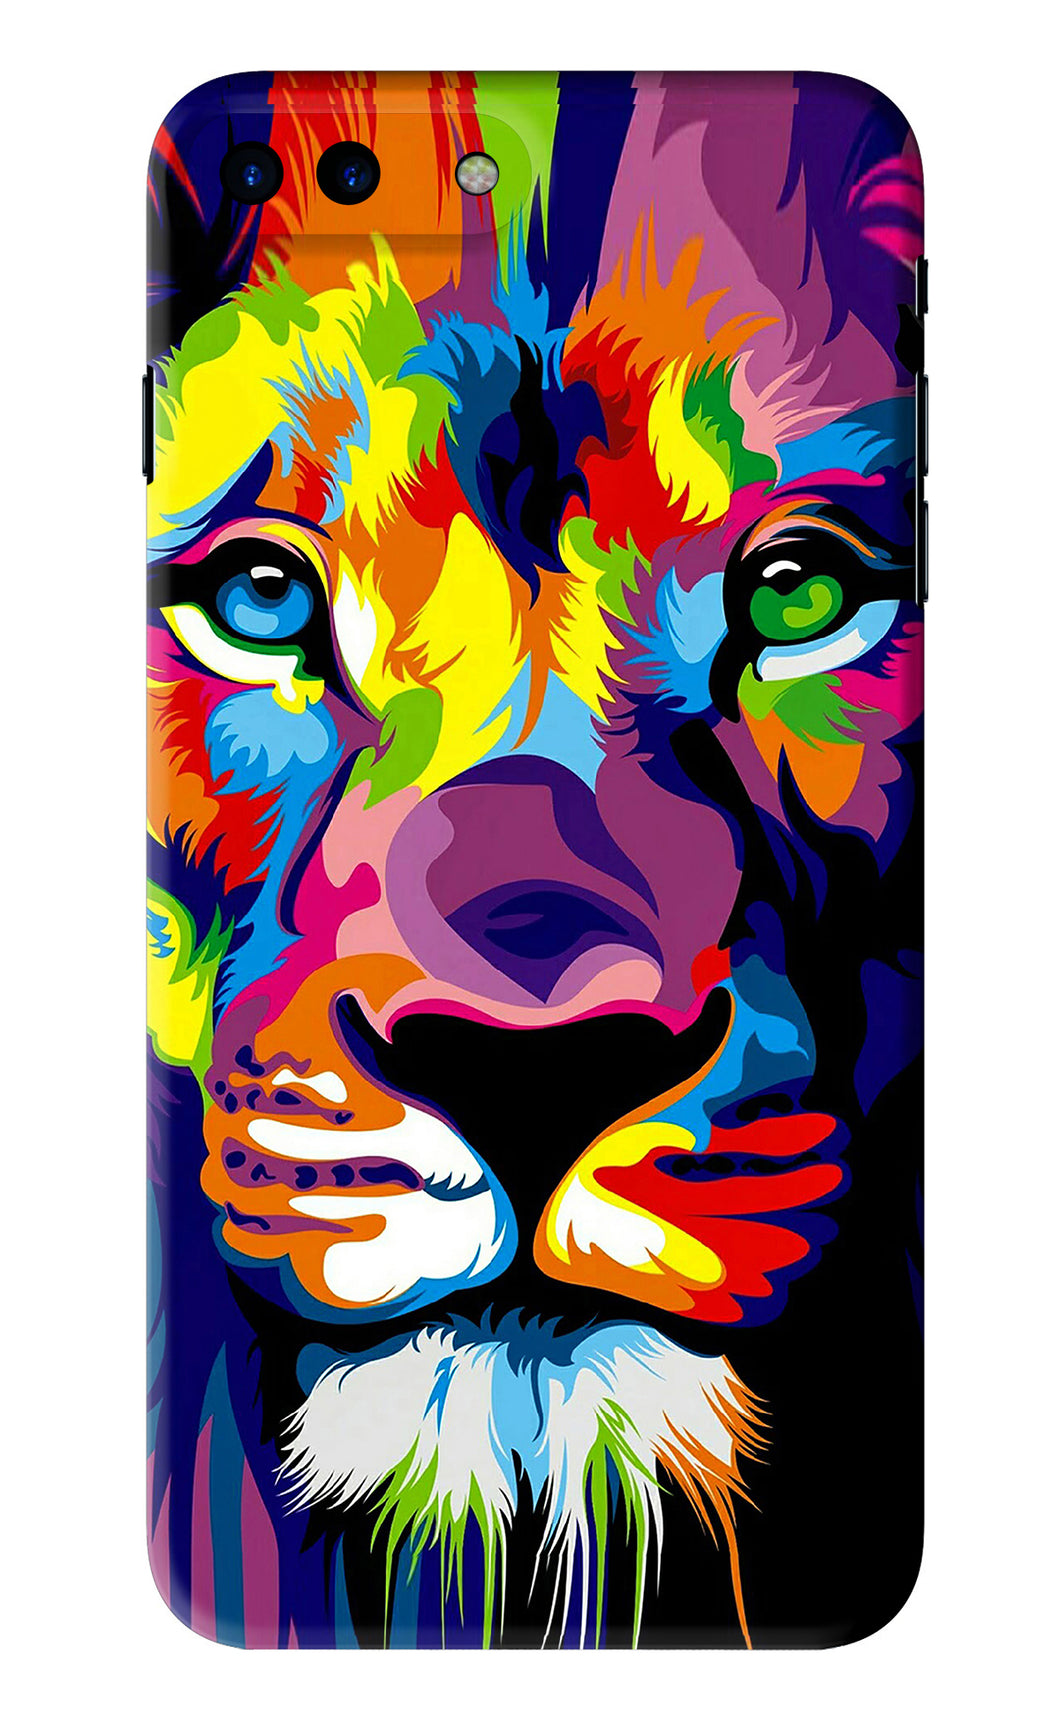 Lion iPhone 8 Plus Back Skin Wrap